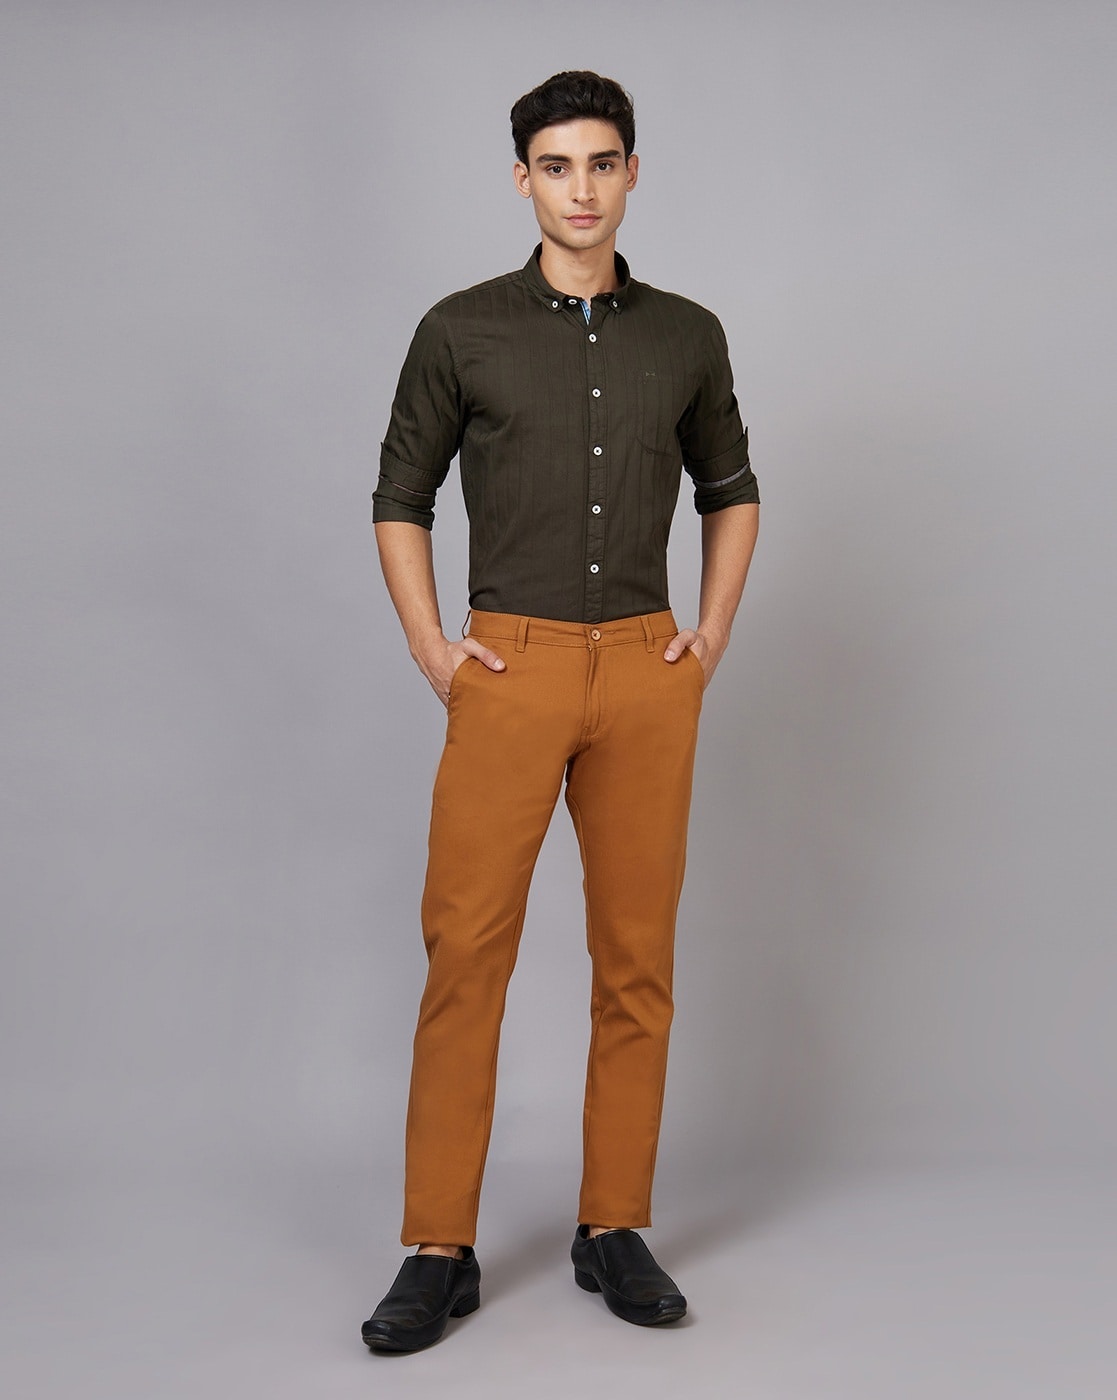 coffee color pant matching shirtepayhssppin